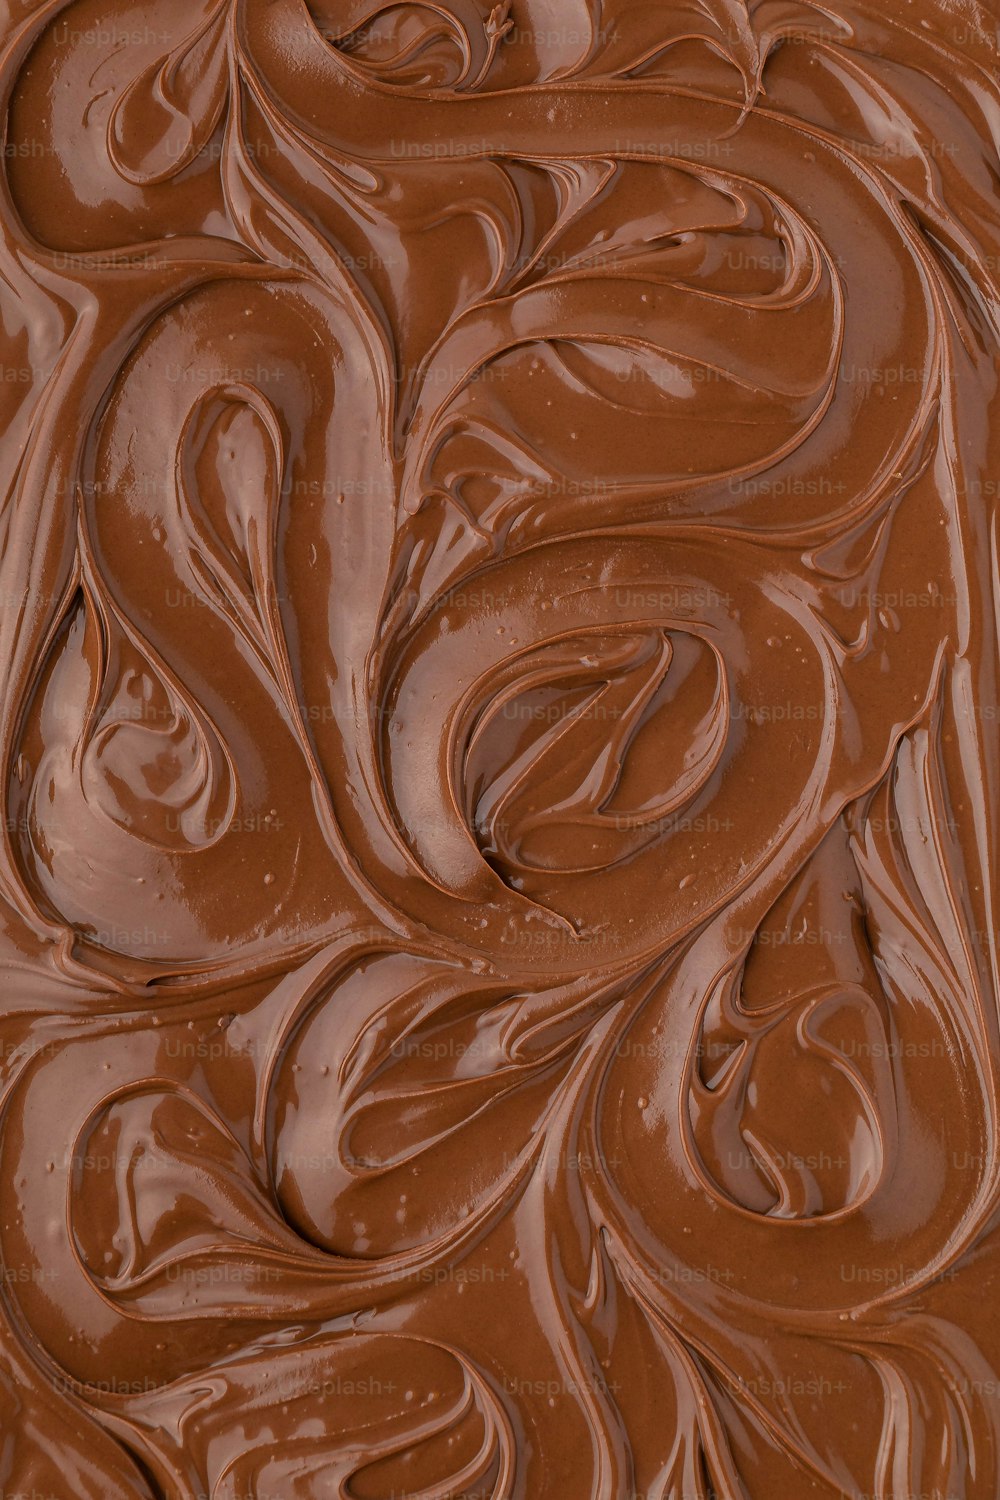 un gros plan d’un gâteau au chocolat avec glaçage au chocolat